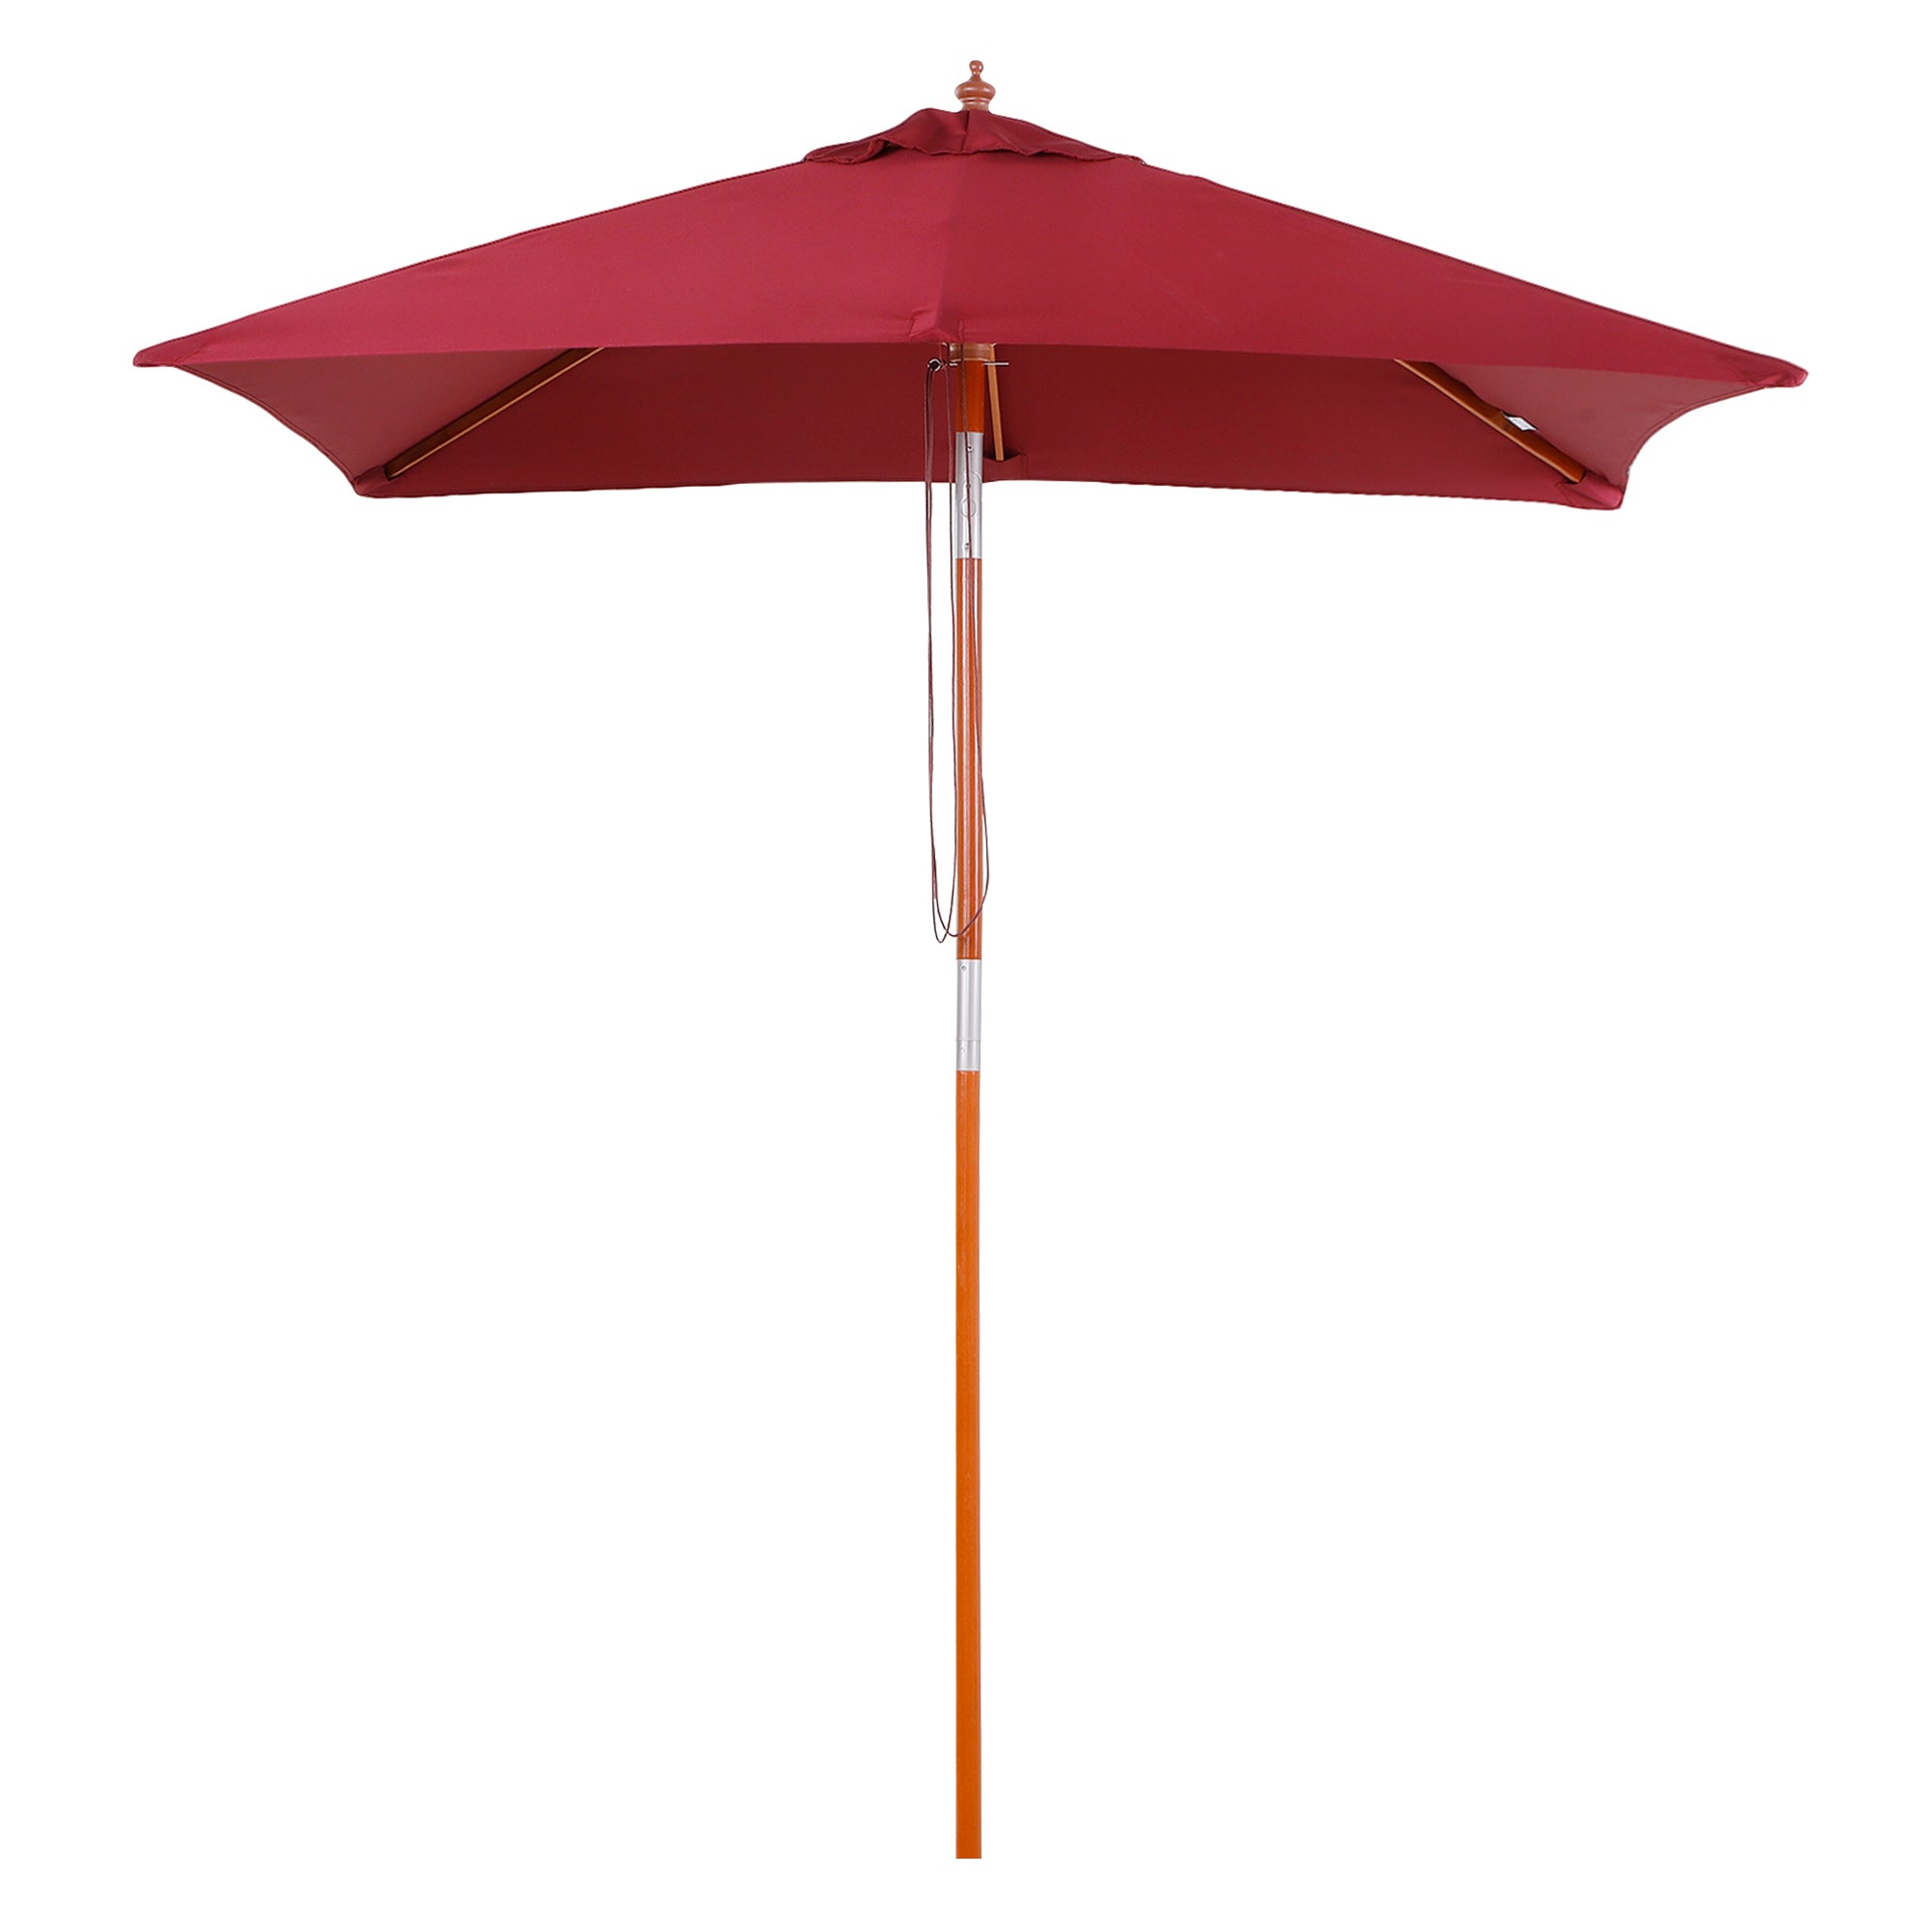 Outsunny Wooden Patio Umbrella Market Parasol Outdoor Sunshade 6 Ribs Wine Red  | TJ Hughes